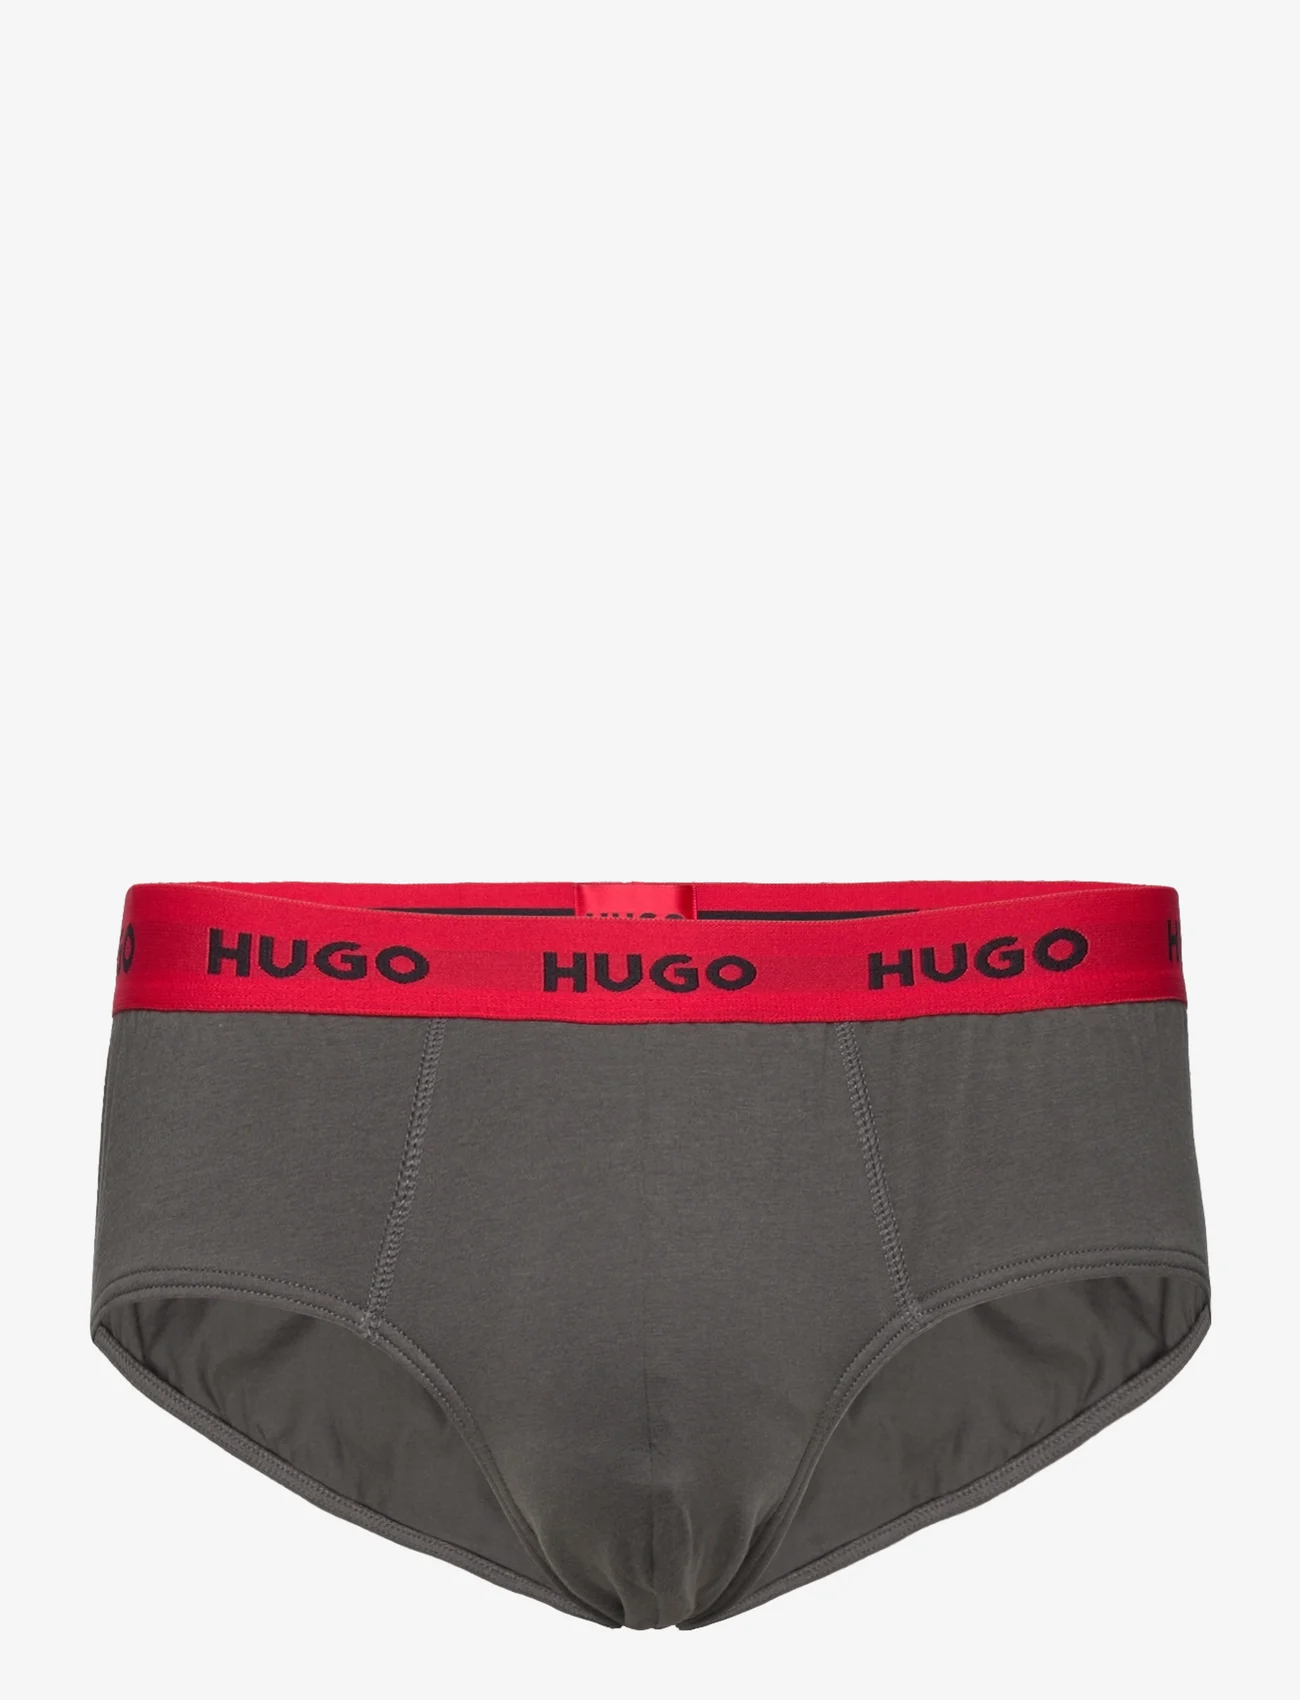 HUGO - HIPBRIEF TRIPLETPACK - unterhosen im multipack - medium grey - 2